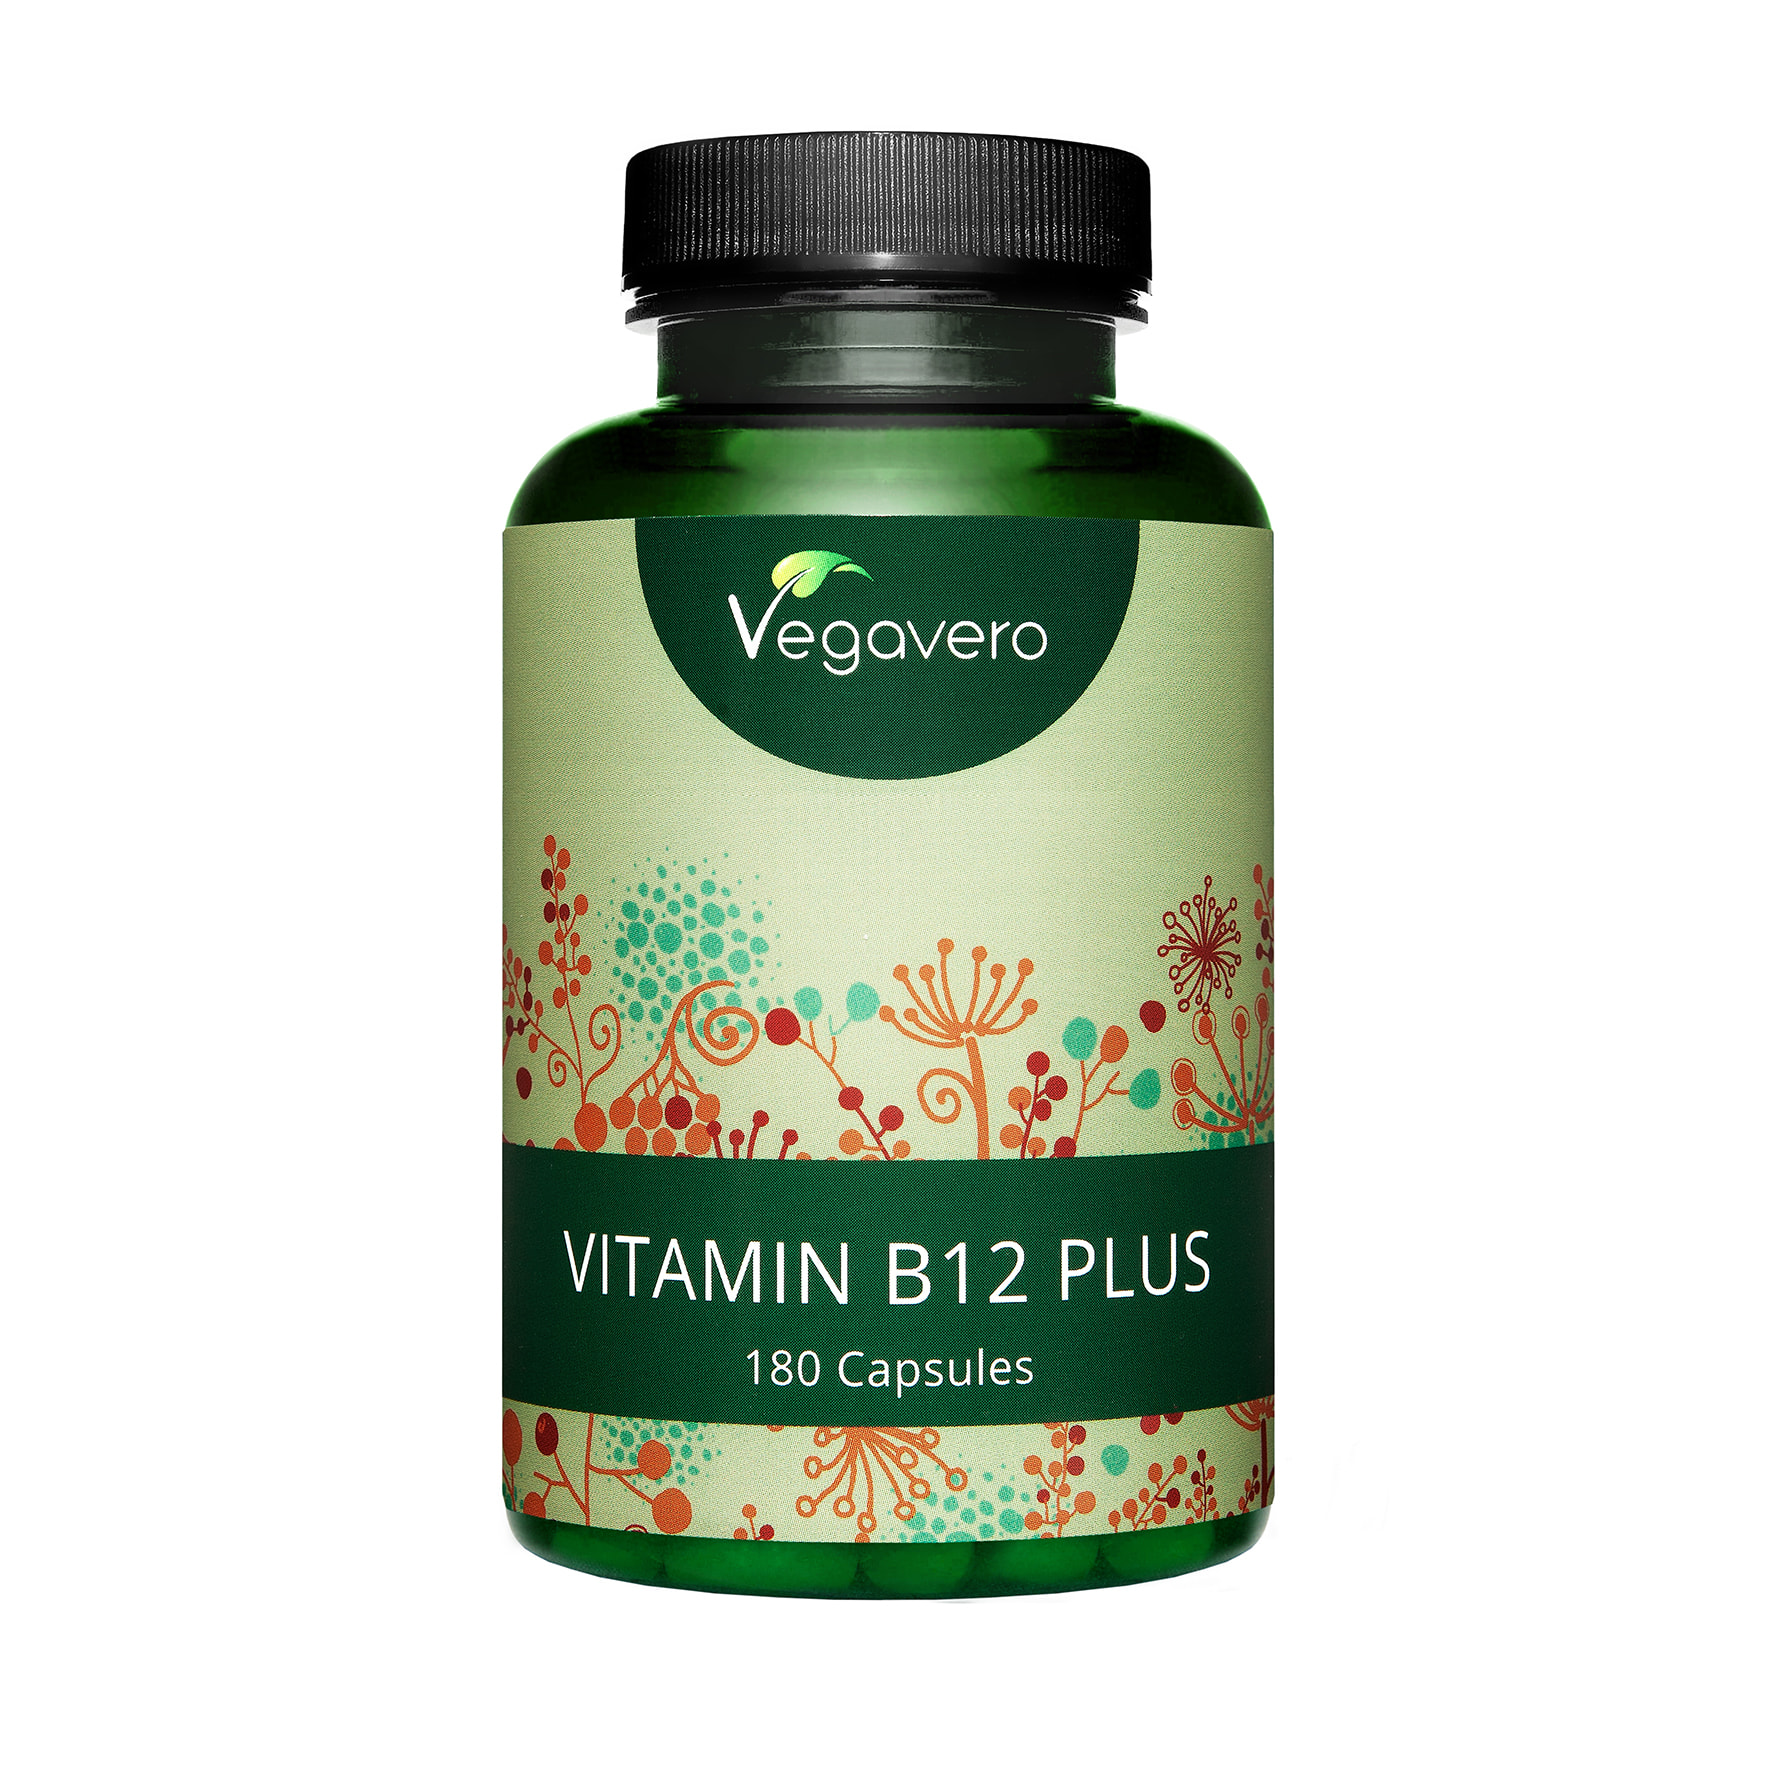 Vitamina b12 și varicoză - Meniu cont utilizator